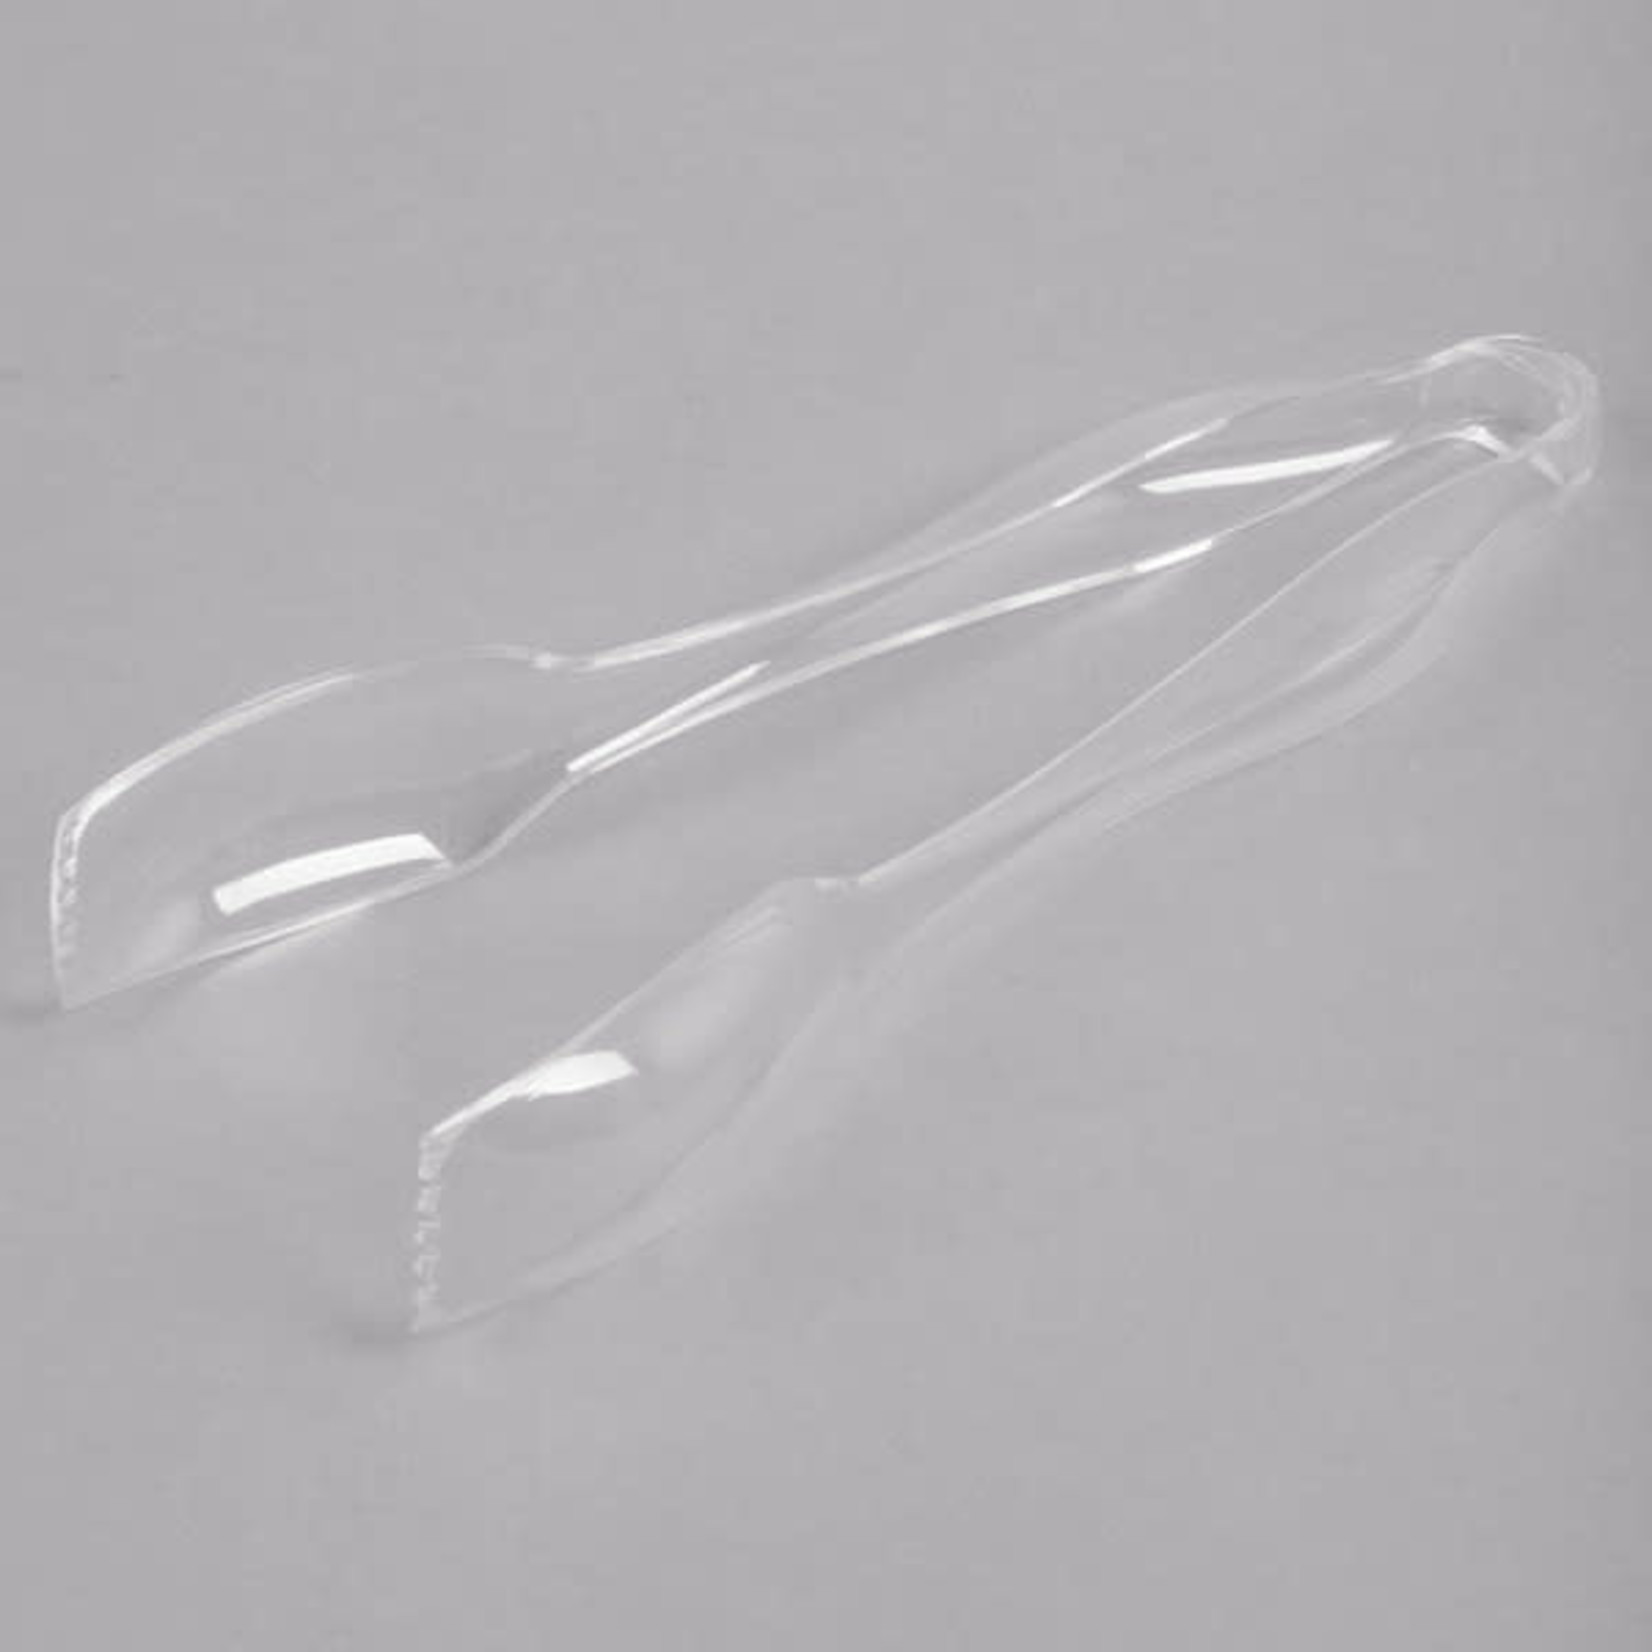 Webstaurant Clear Plastic Disposable Tongs 10.5" - 36/cs